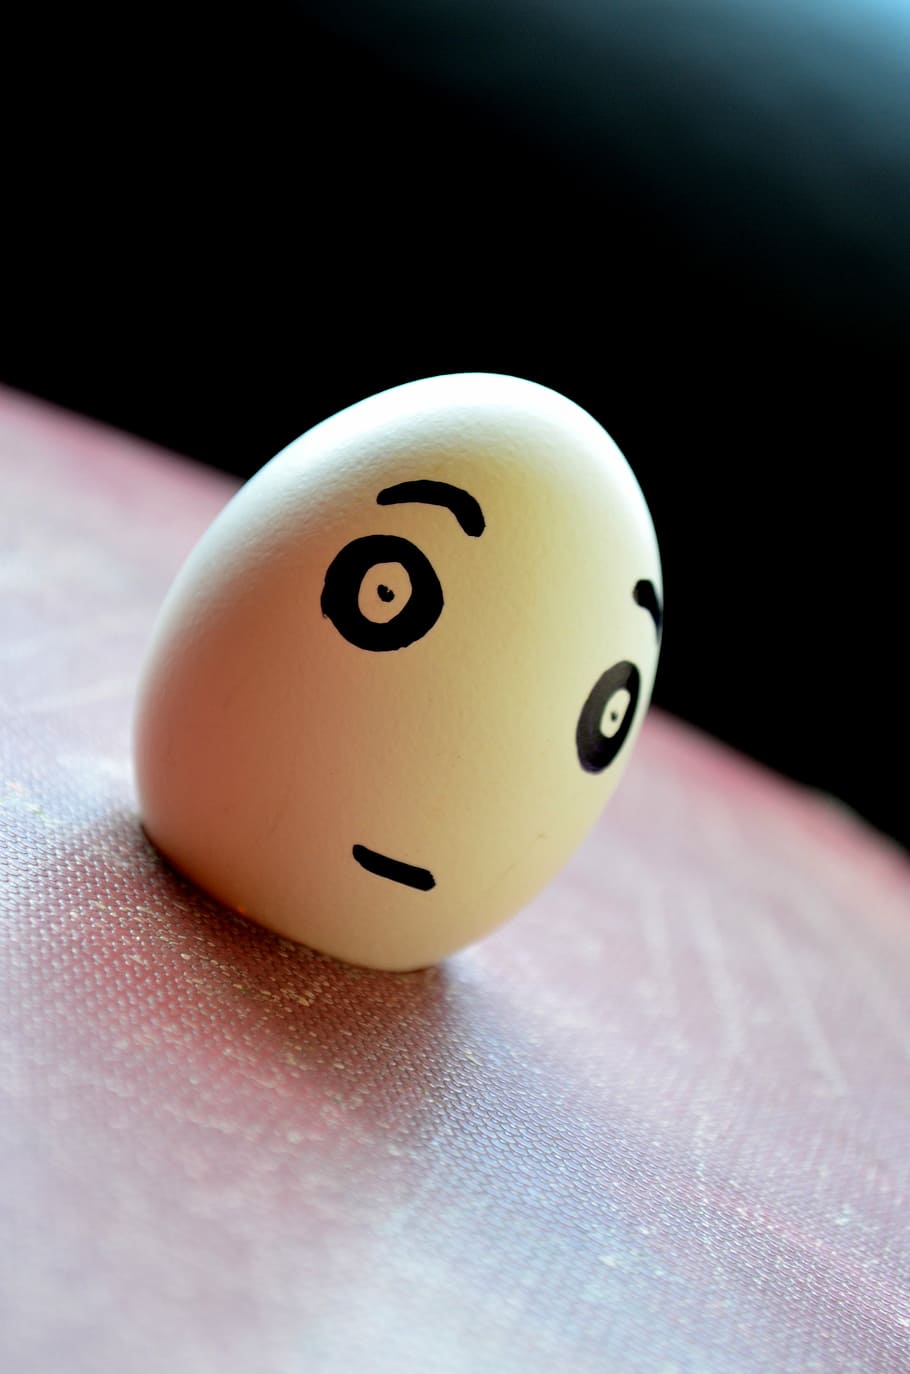 egg, mad, sad, emoticon, funny, face, expression, close-up, still life, indoors